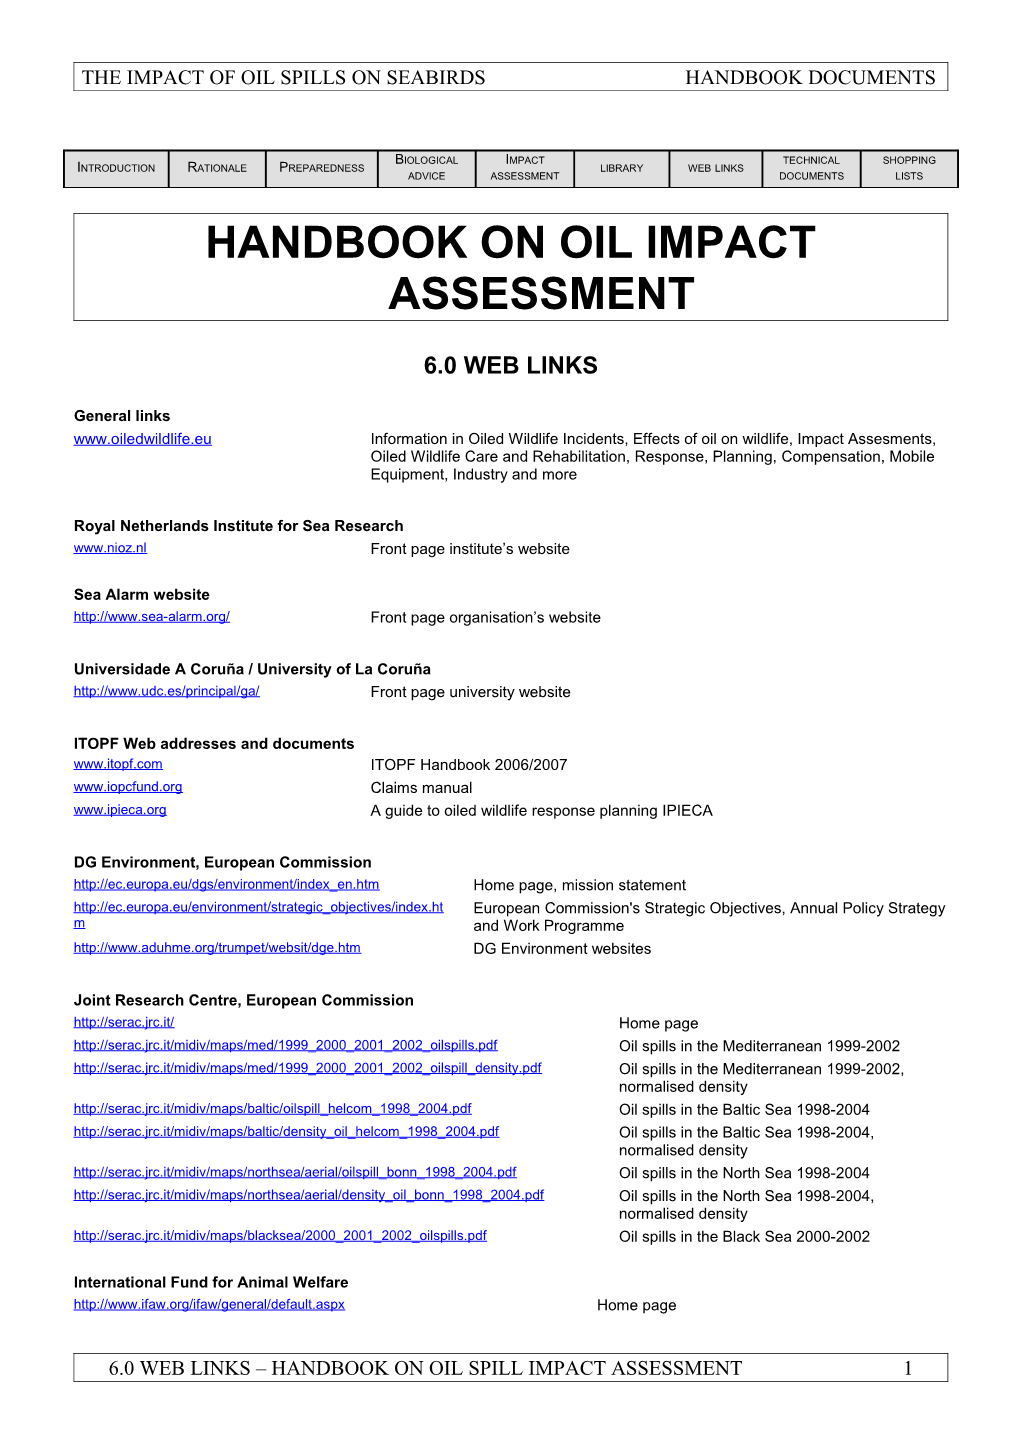 The Impact of Oil Spills on Seabirdshandbook Documents